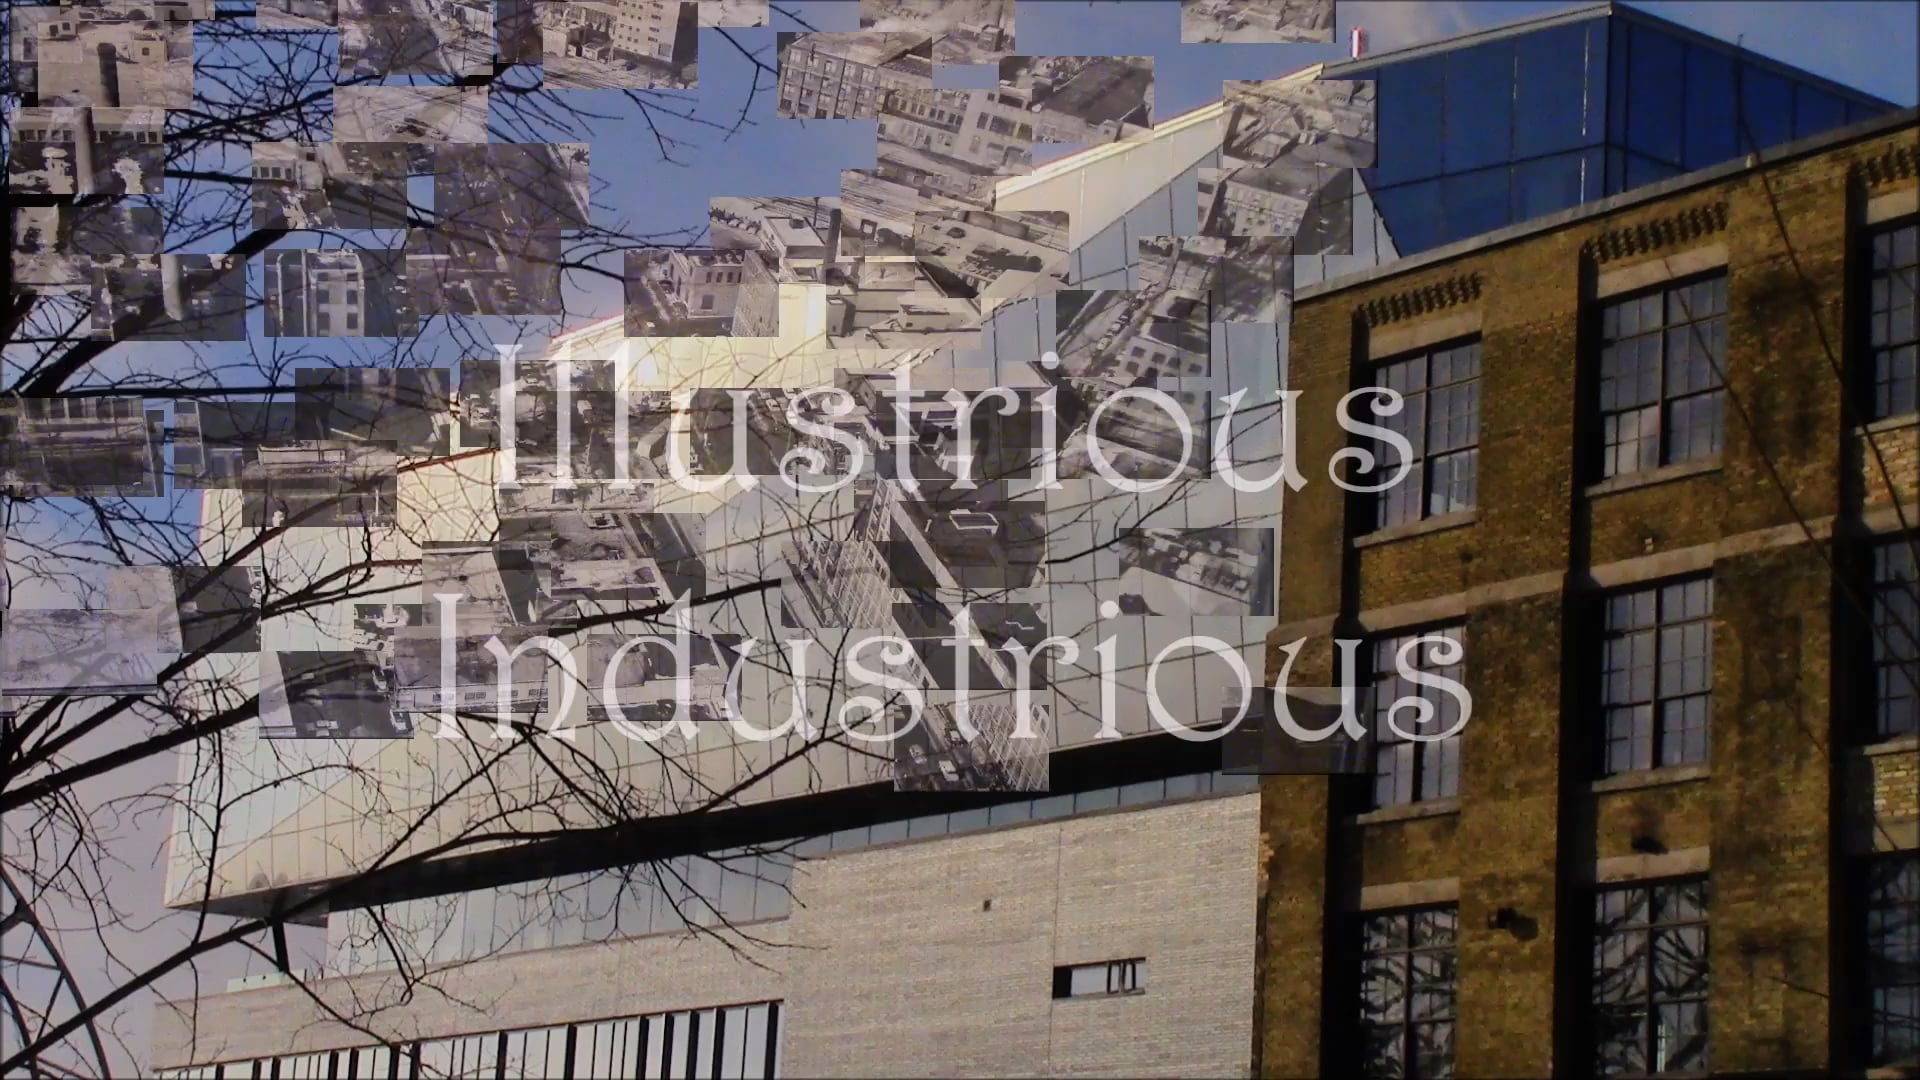 Illustrious Industrious Clue #6 on Vimeo